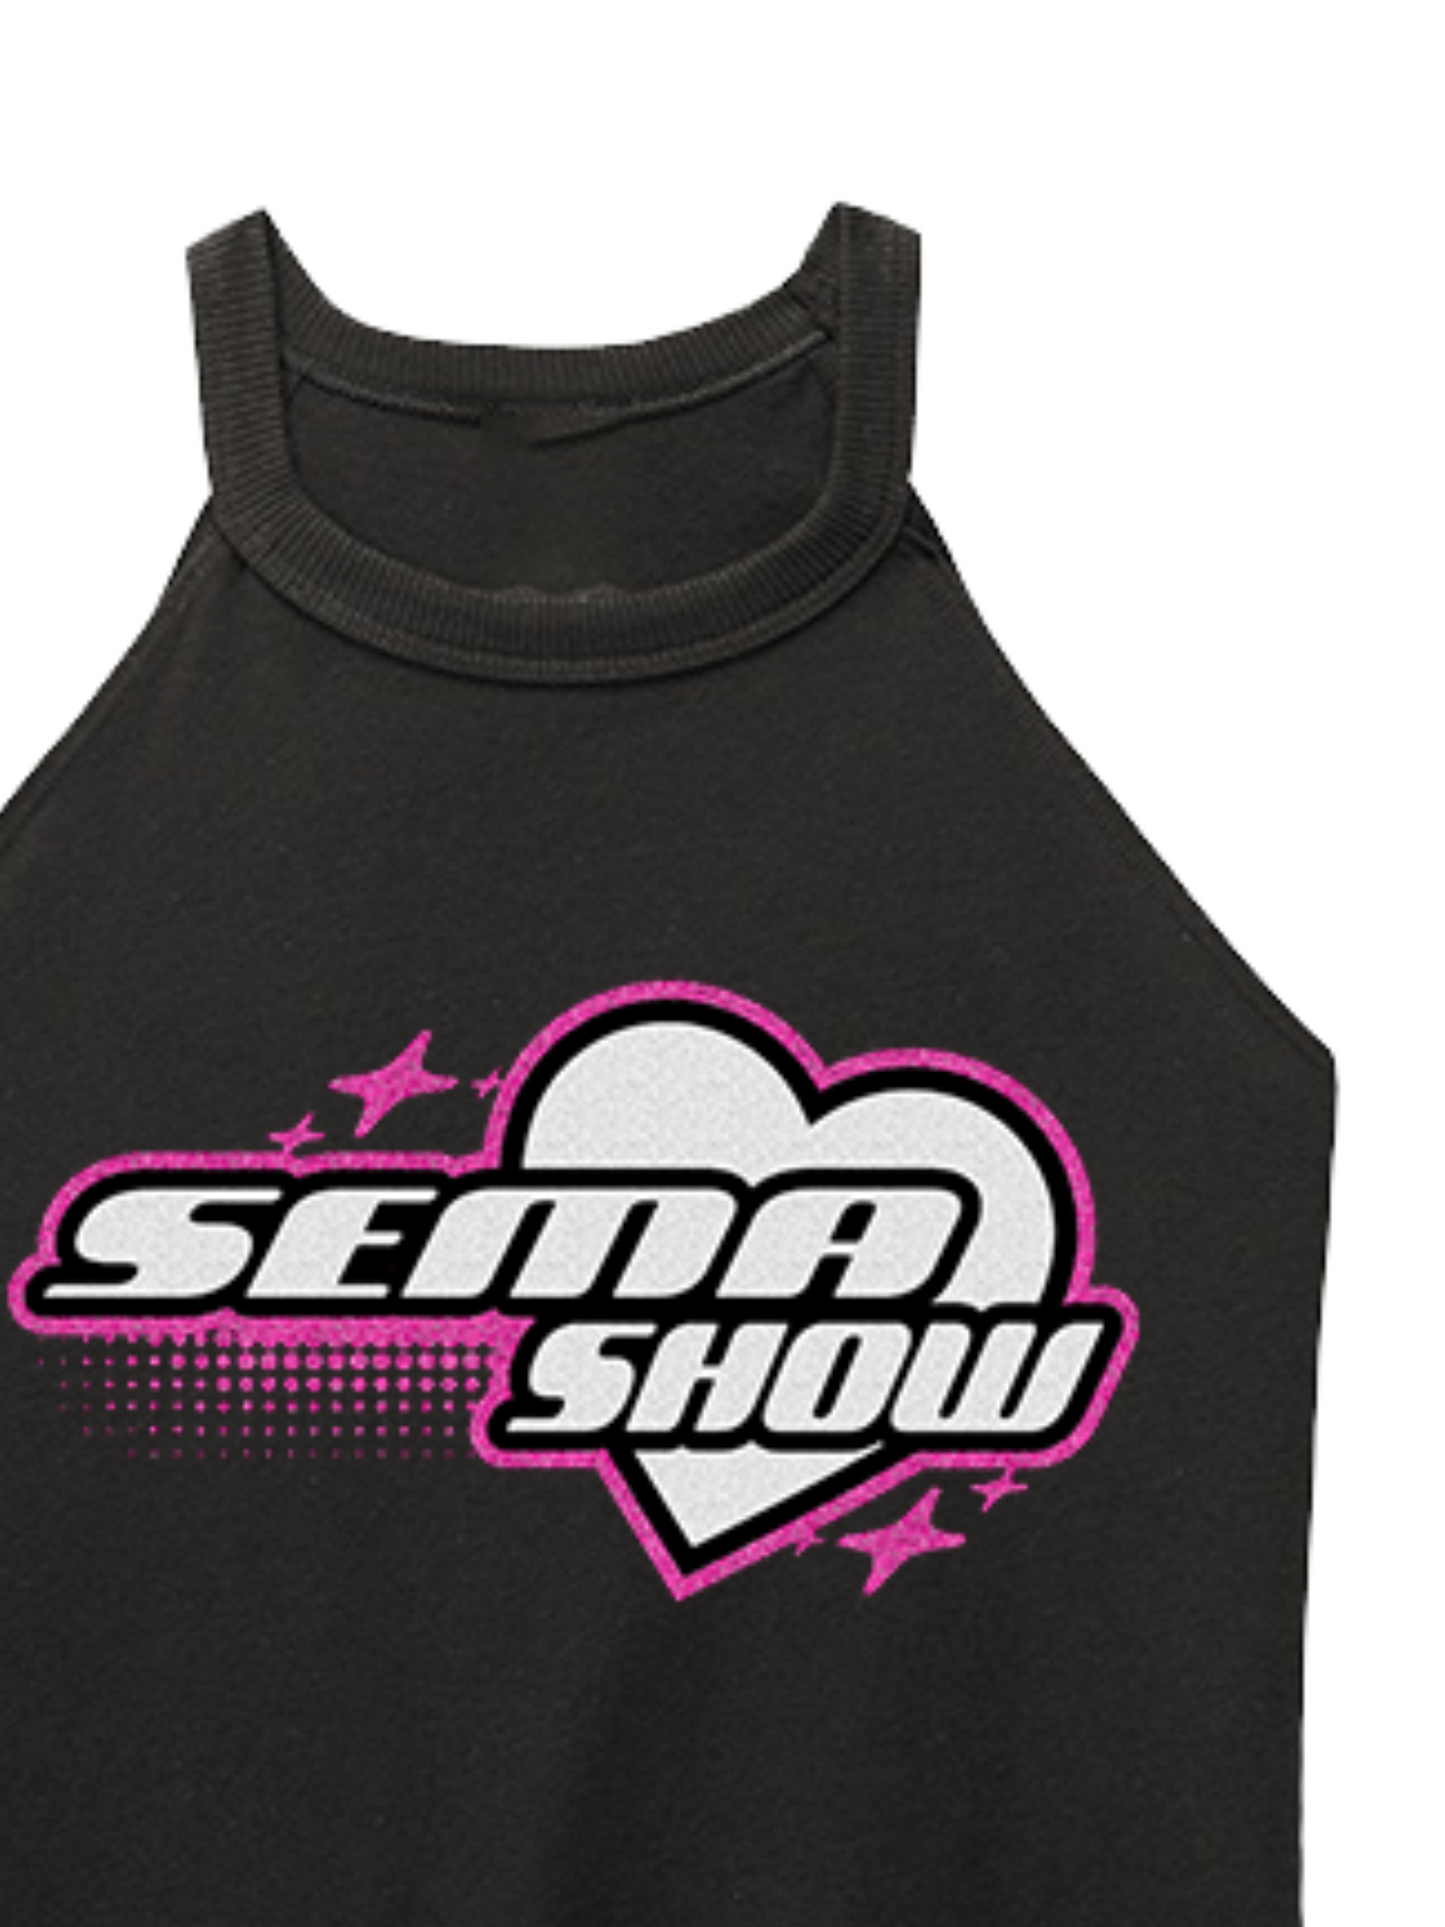 SEMA Show - Ladies Tank Top